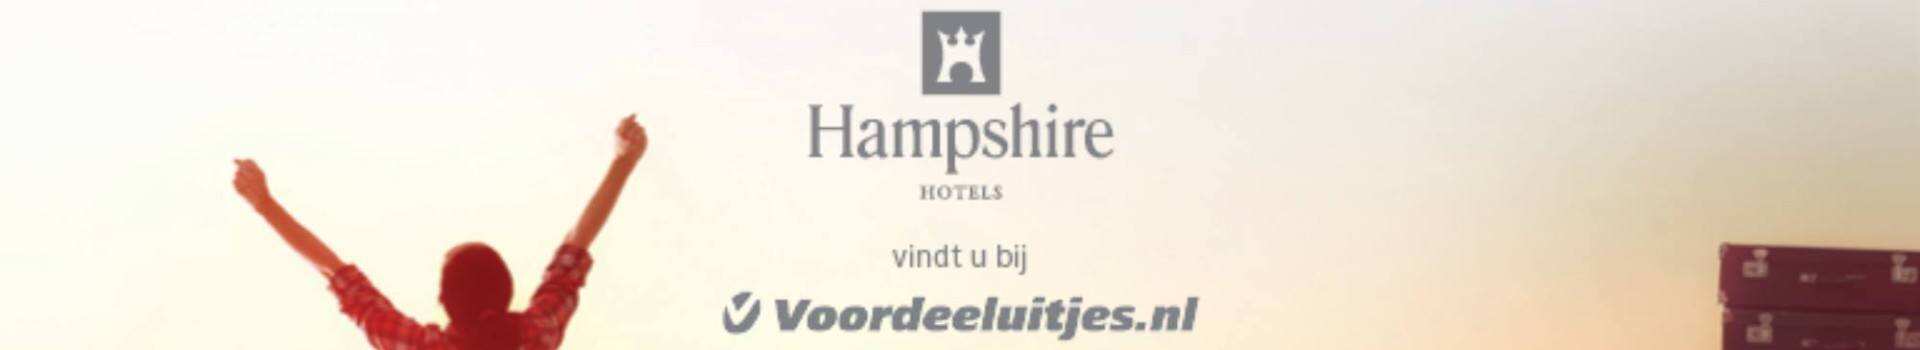 Hampshire Hotels